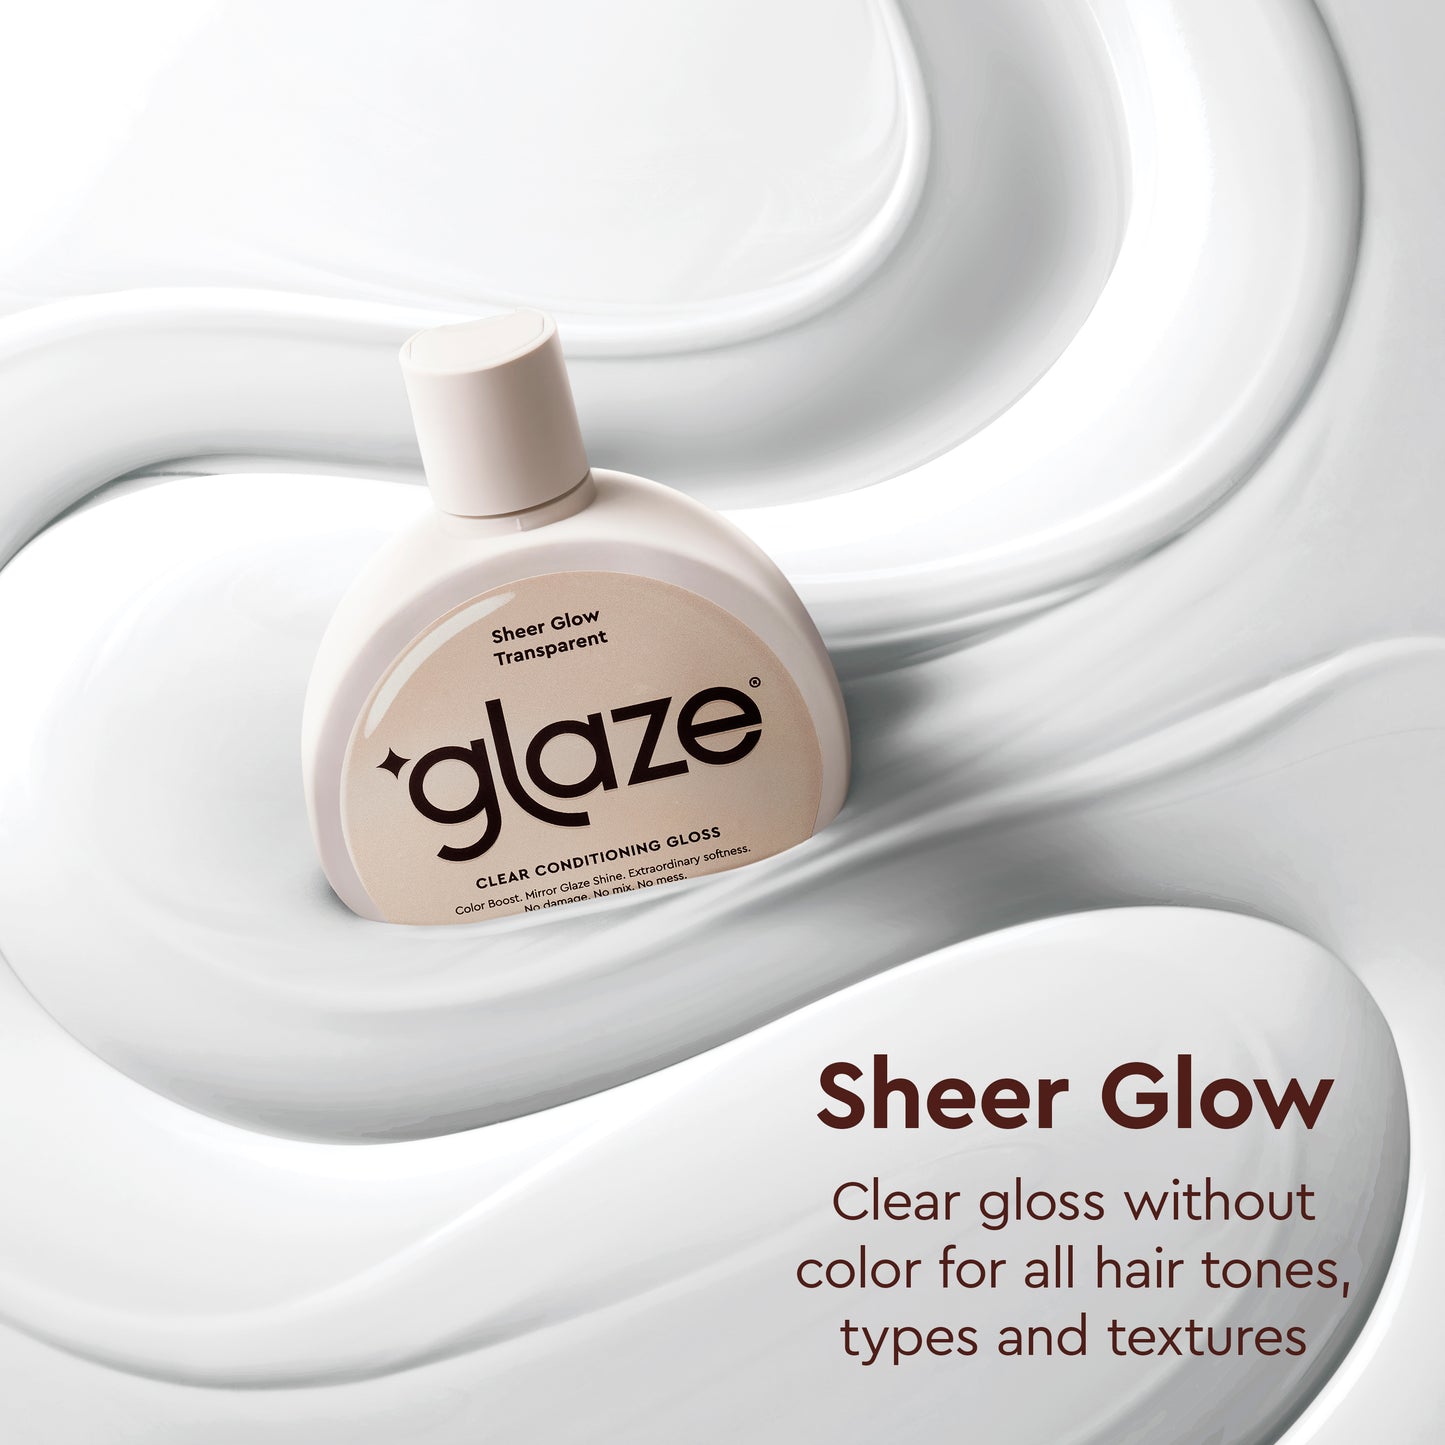 Super Gloss Trio Sheer Glow - Save 20%